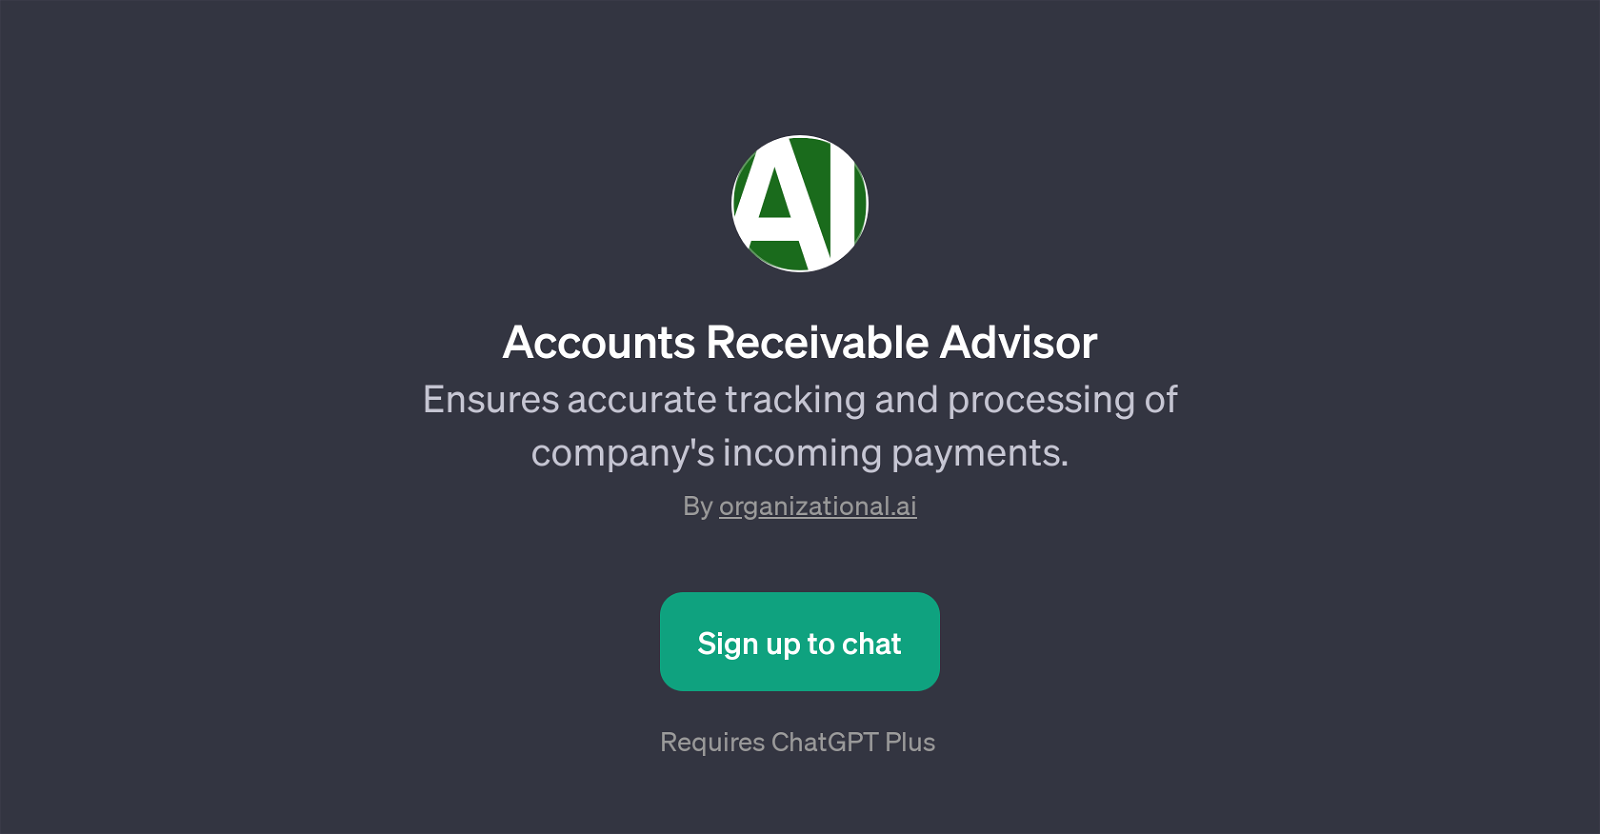 Accounts Receivable Advisor website